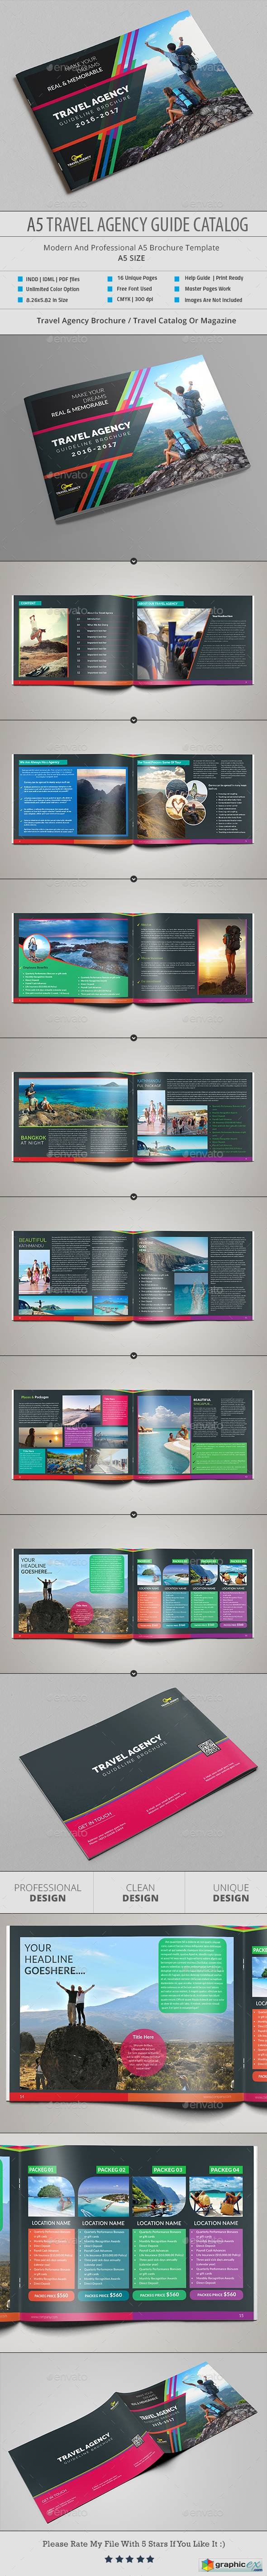 A5 Travel Agency Guide Catalog